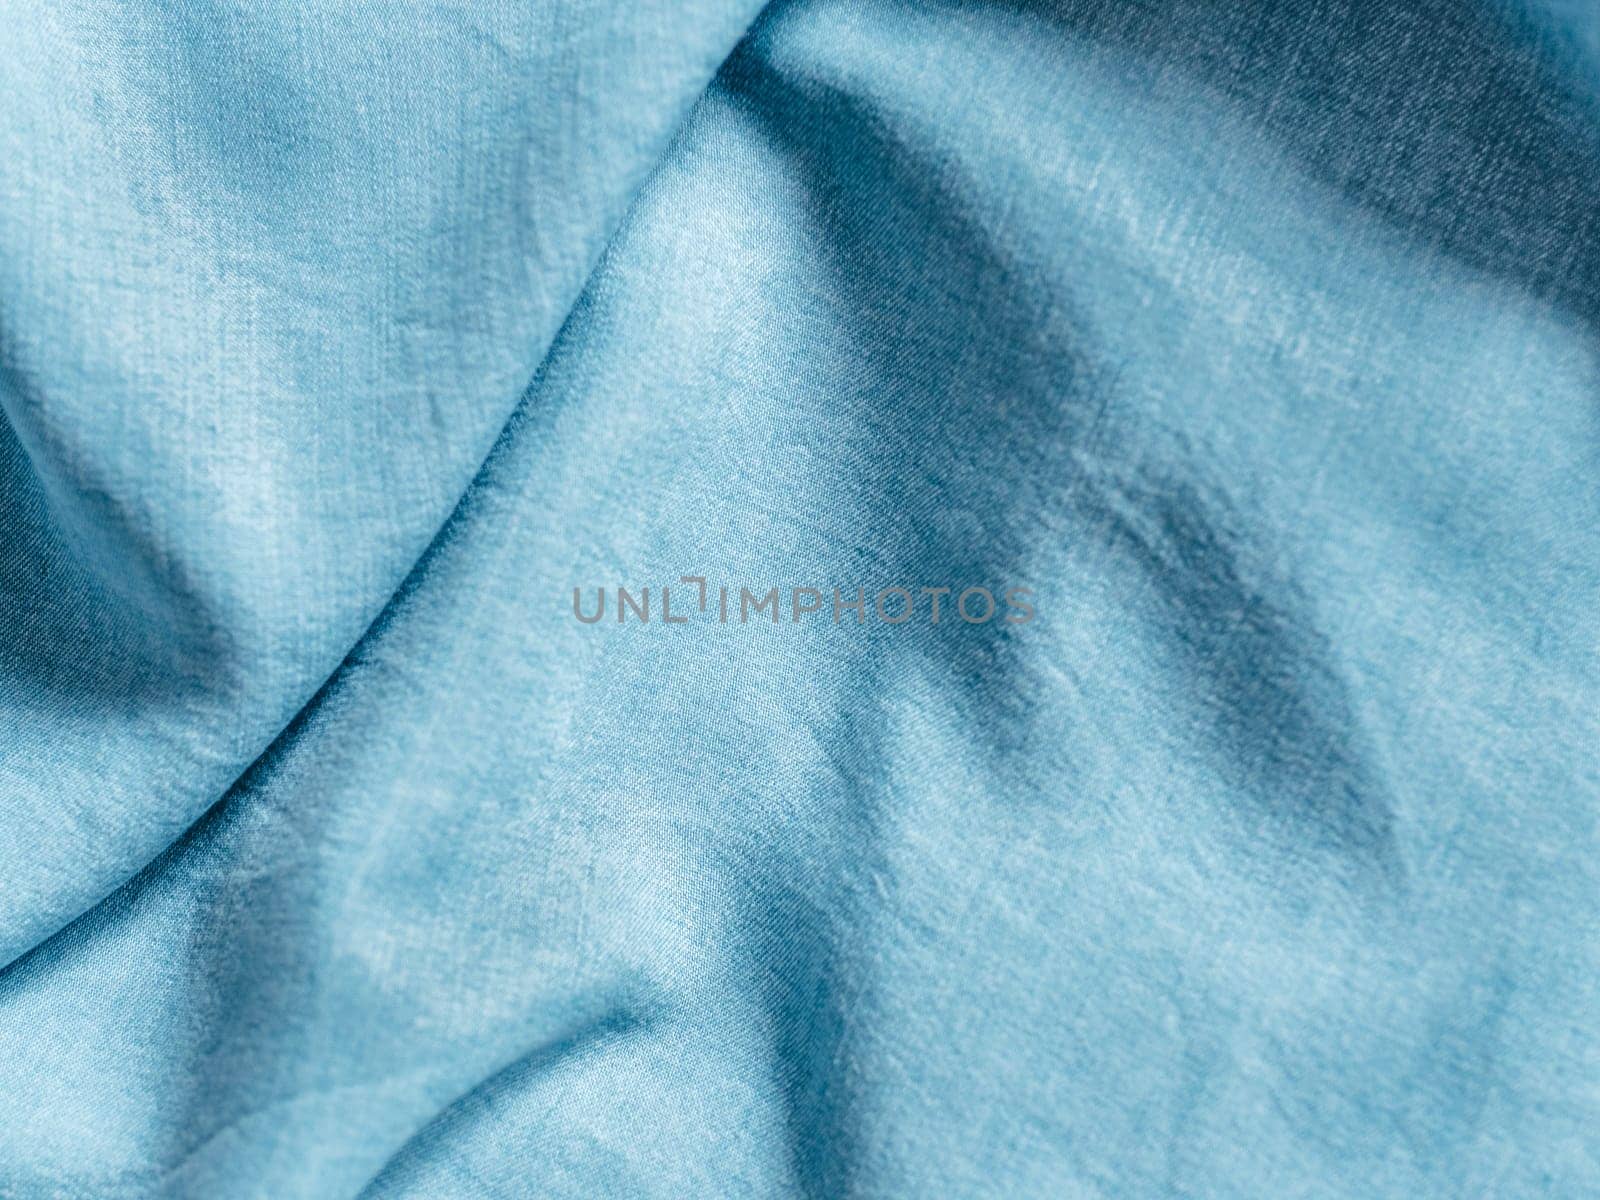 Lyocell or tencel blue denim pattern texture by fascinadora